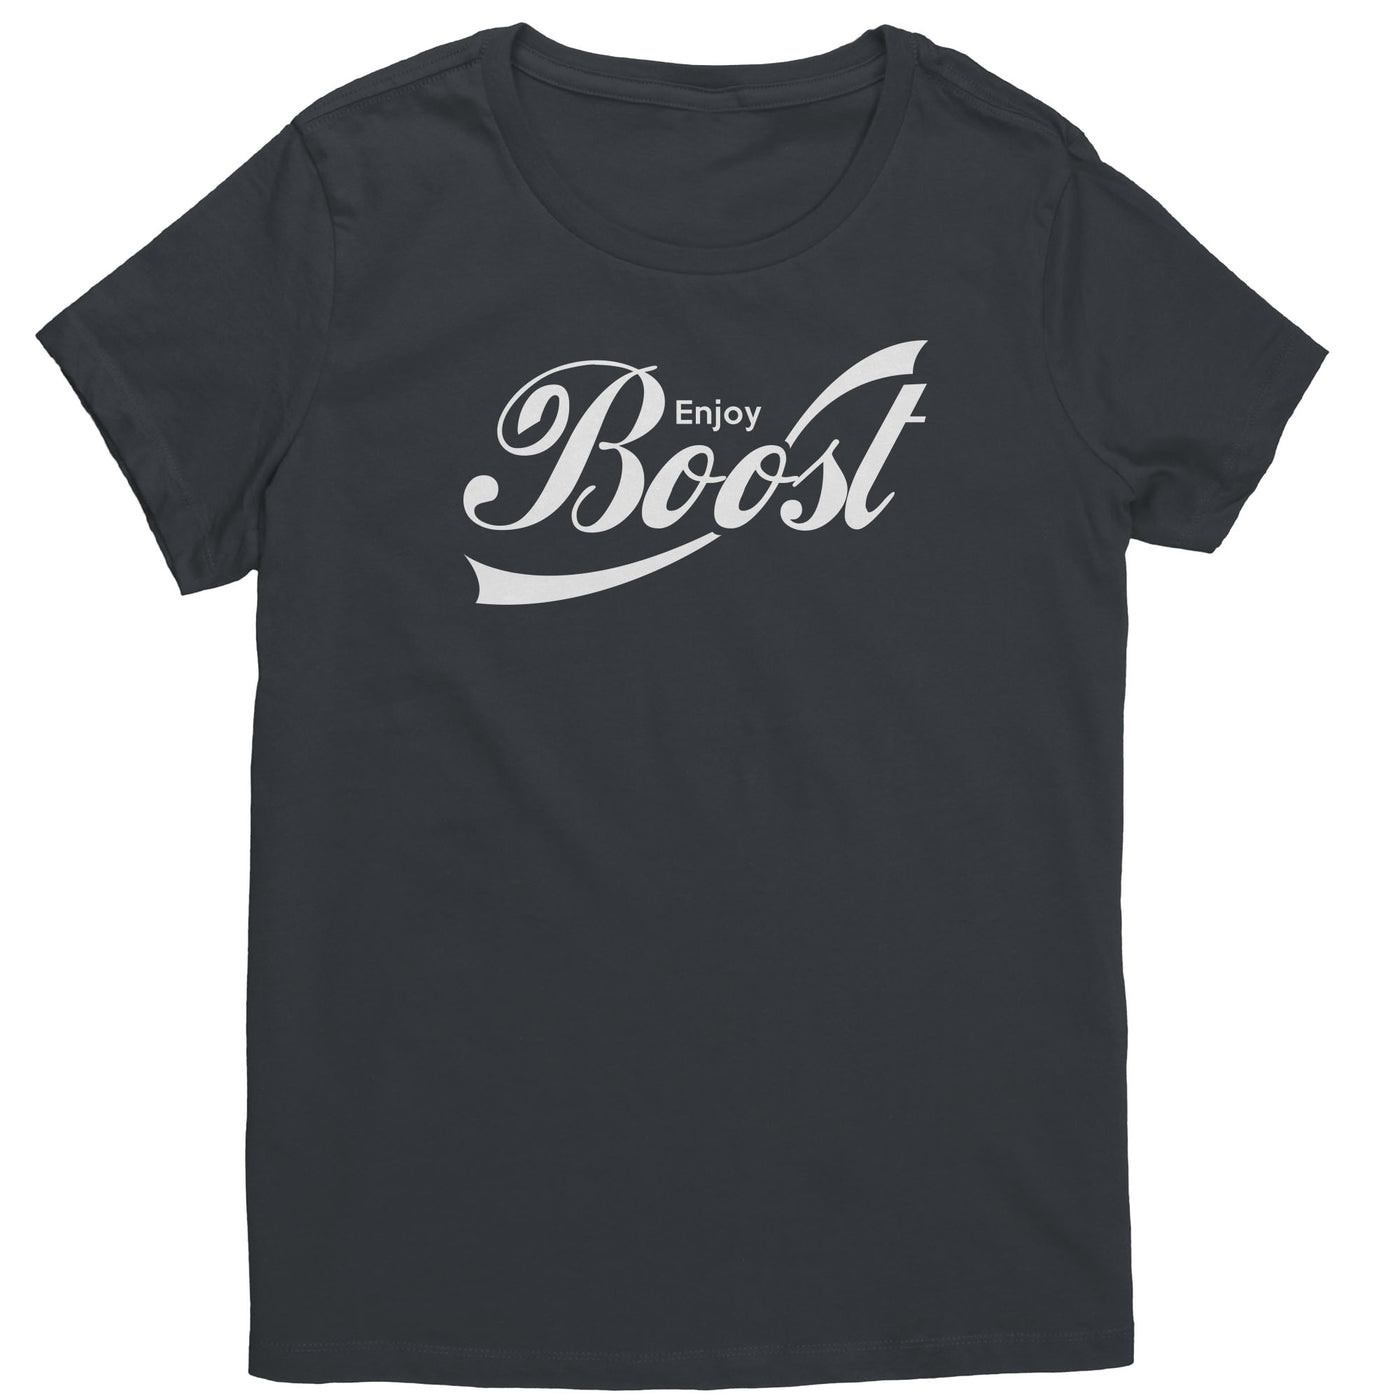 enjoy-boost-womens-shirt-charcoal